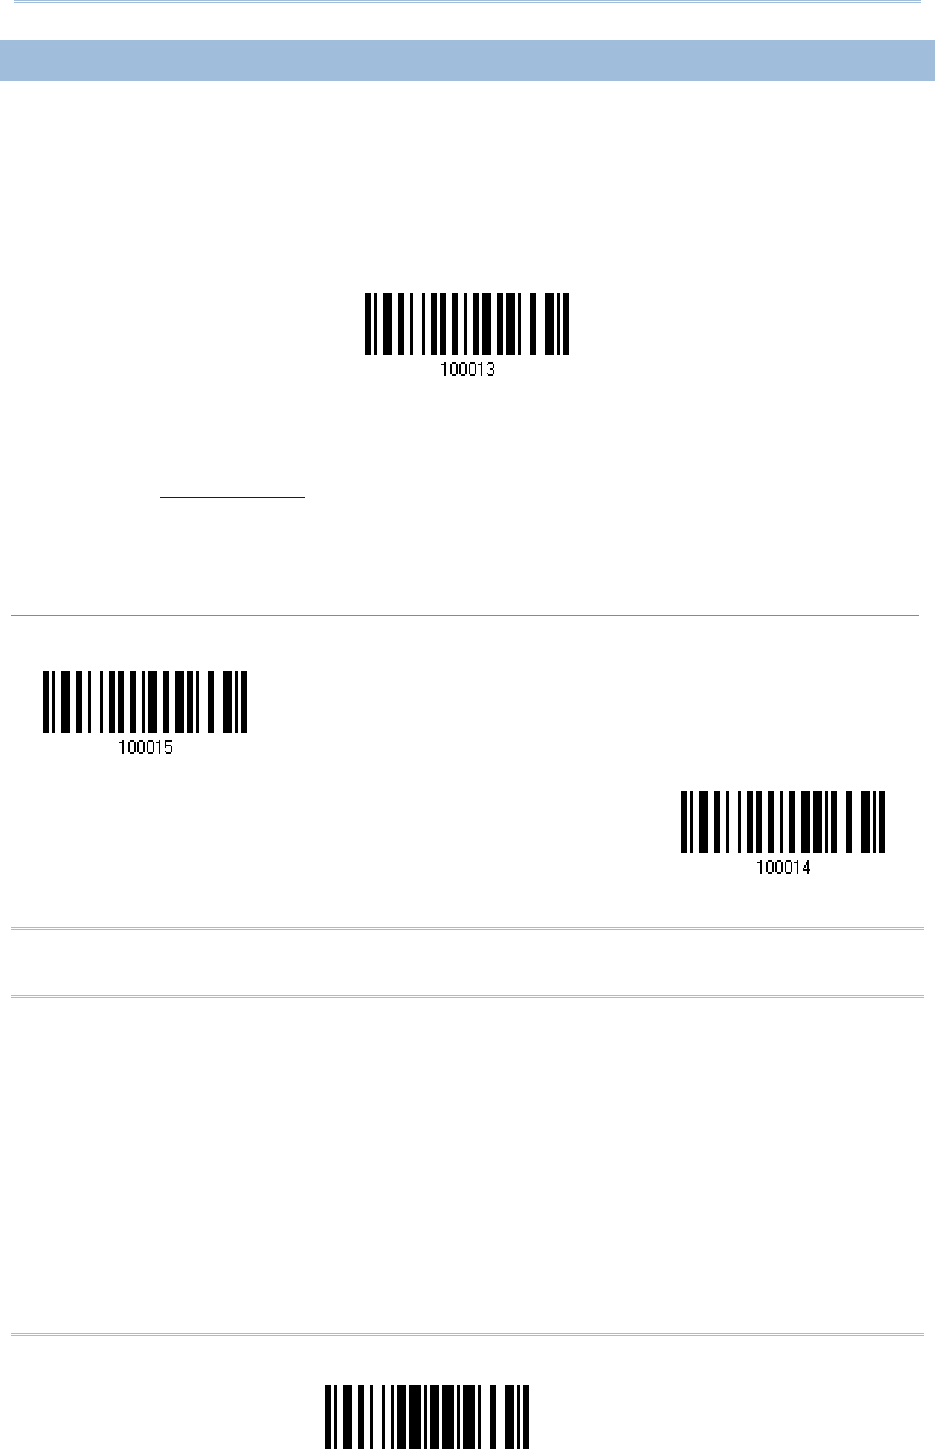 CipherLab 3656 BT Cradle User Manual 1560 Series Barcode Scanner